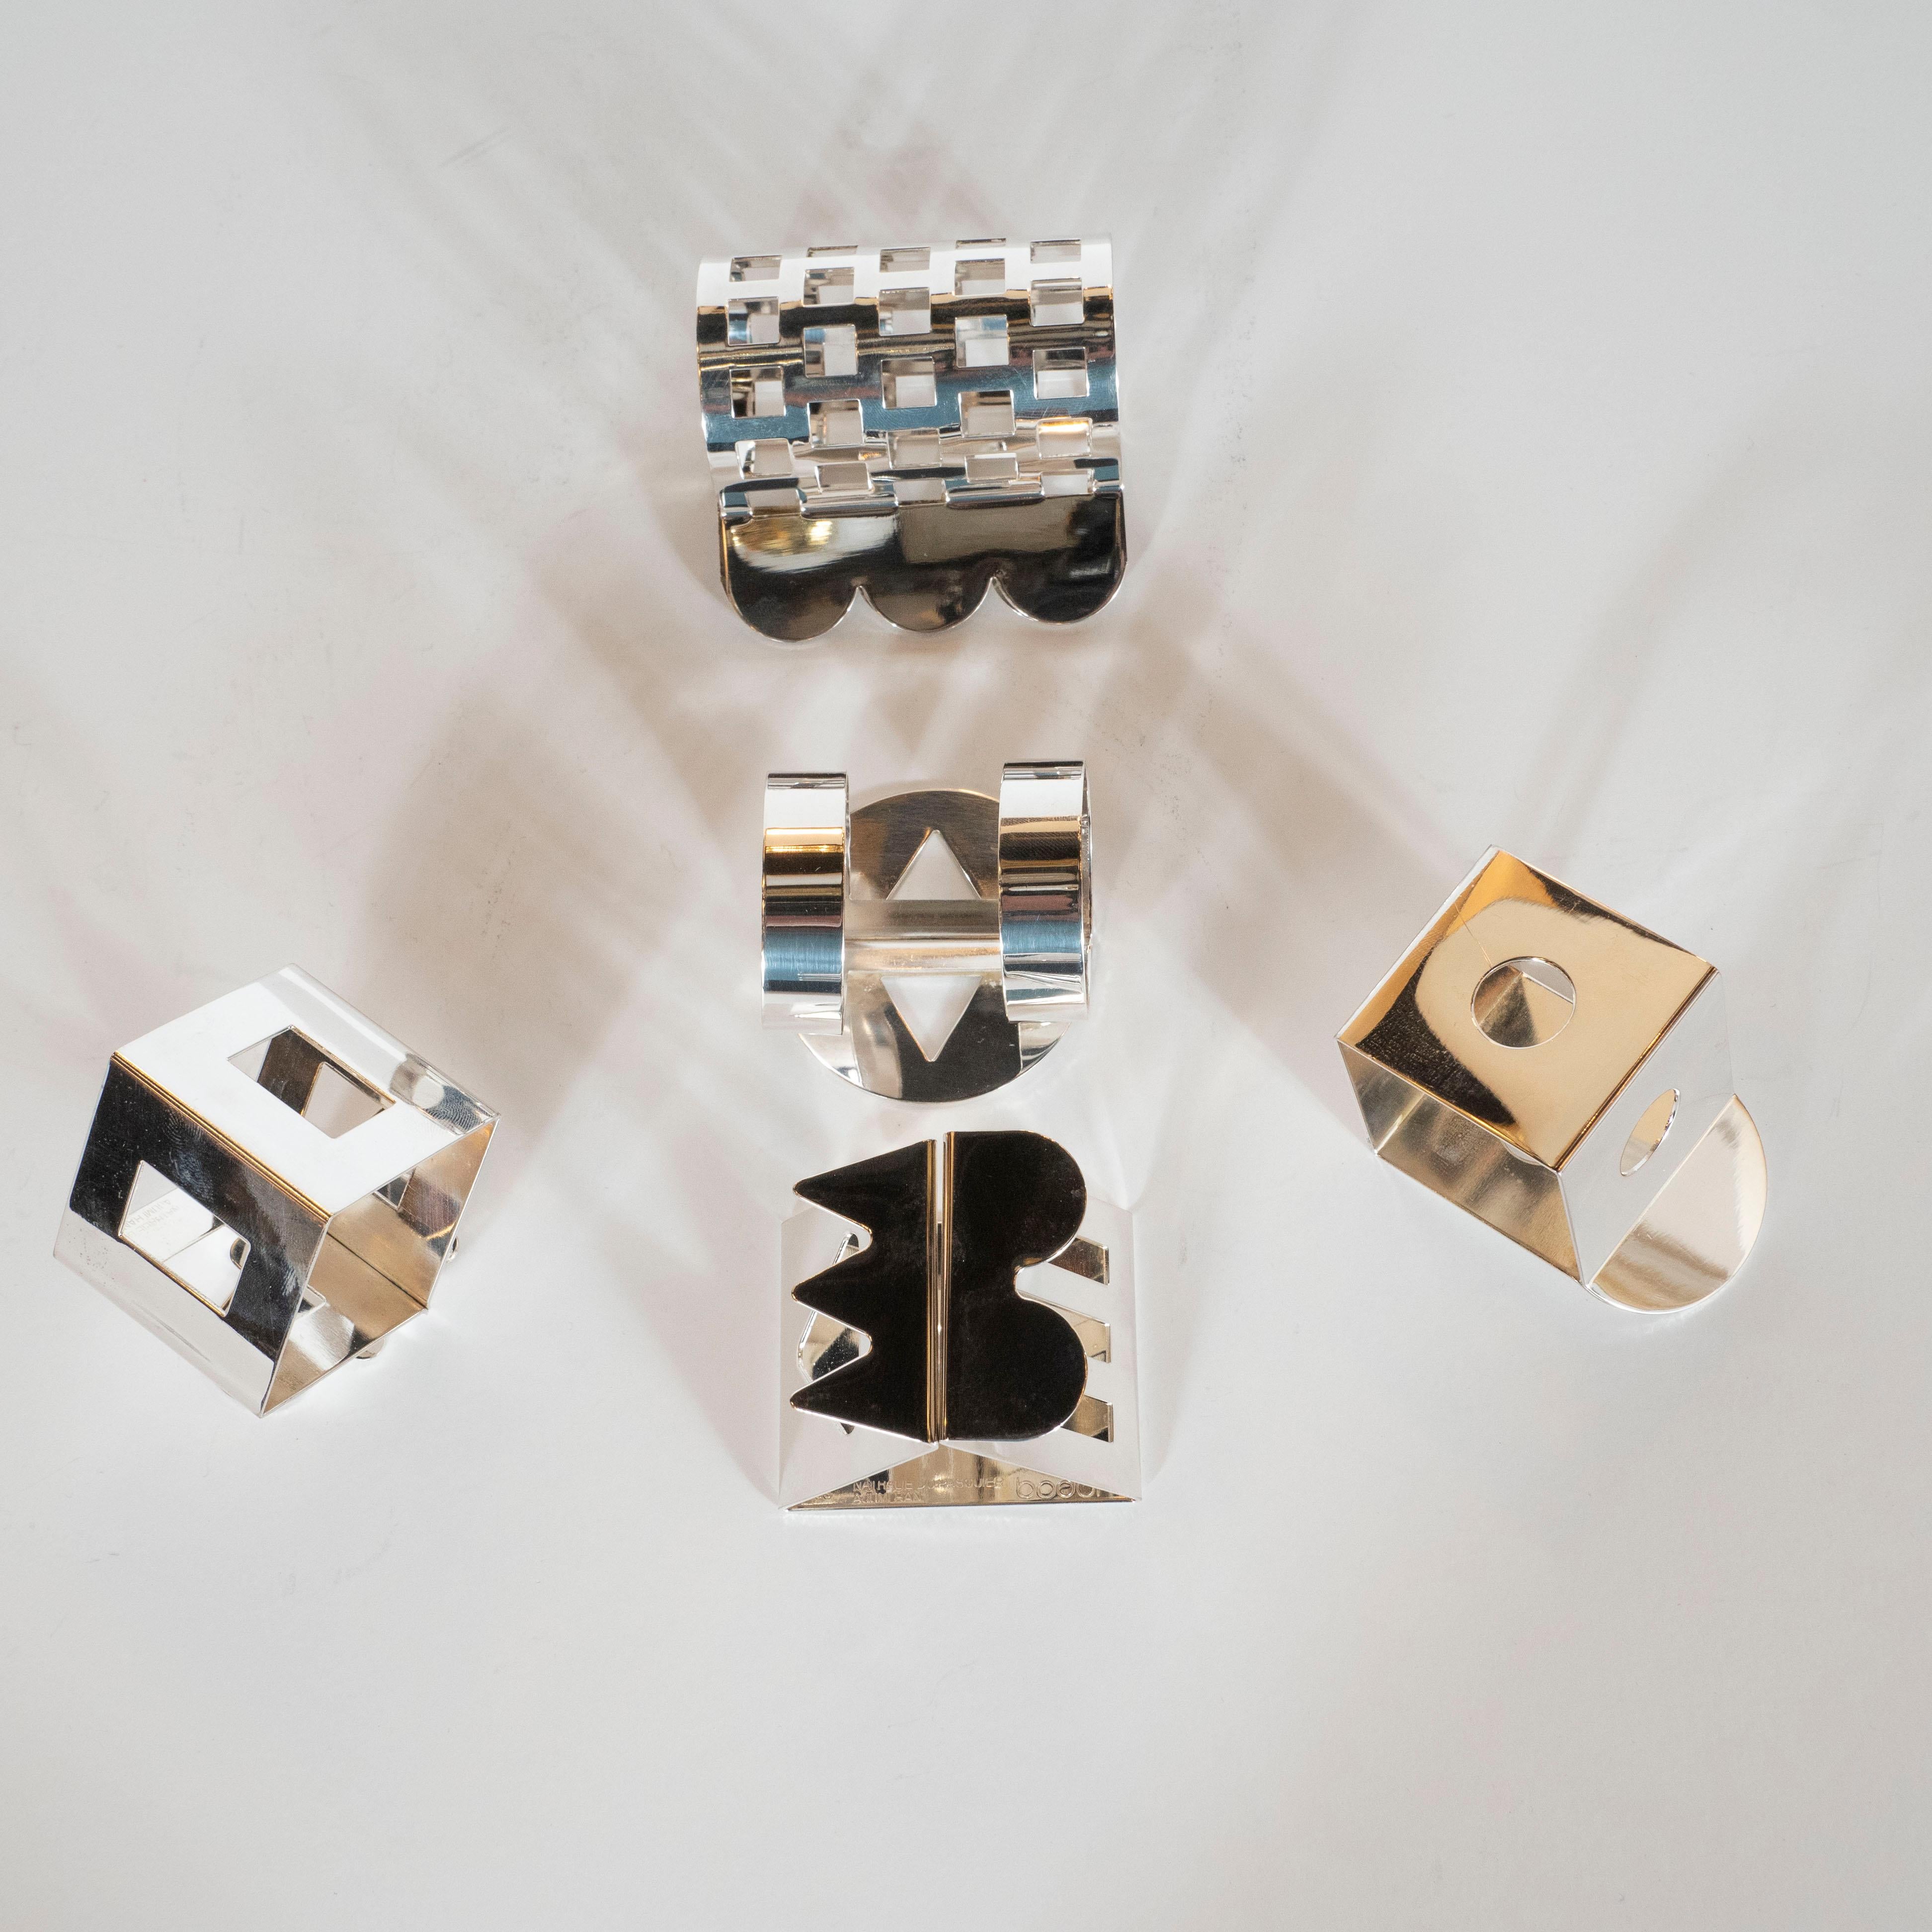 Modernist Memphis Silverplate Napkin Rings by Nathalie du Pasquier for Bodum 1